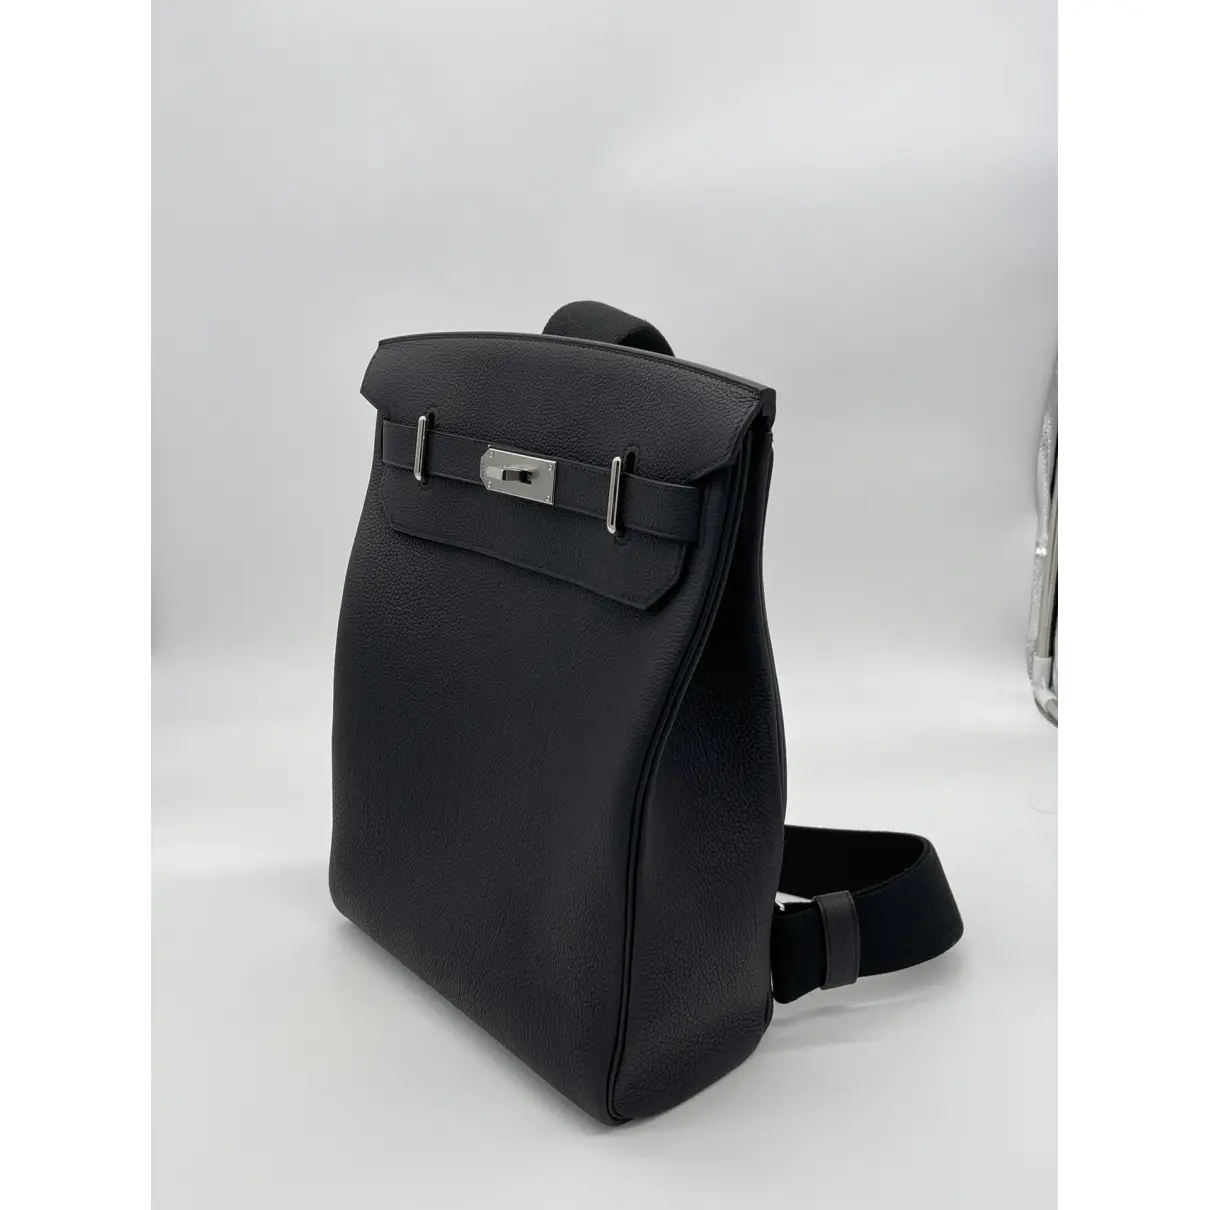 Buy Hermès Sac à dépèches leather travel bag online